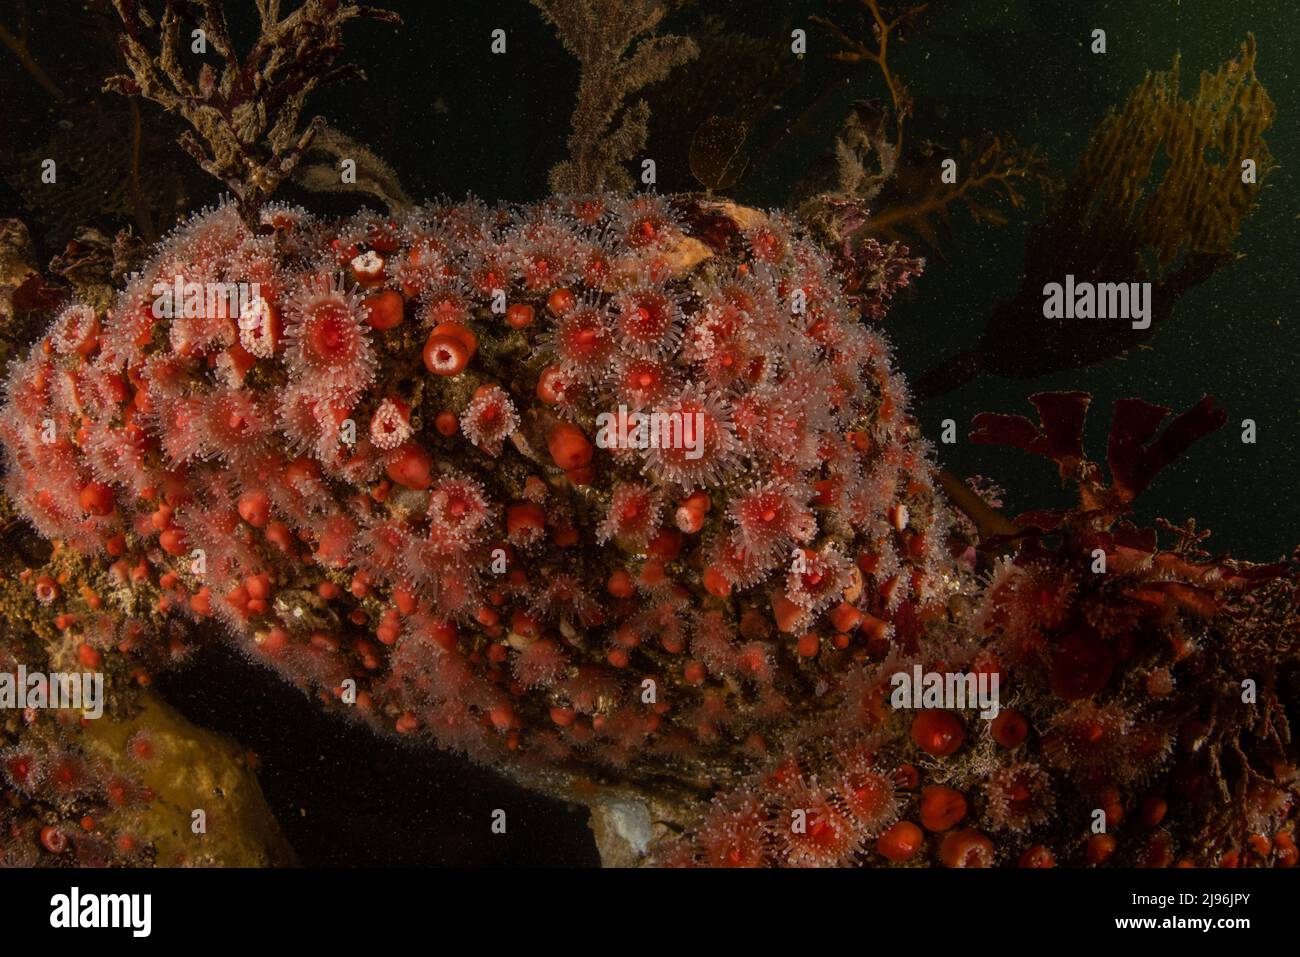 A colony of Strawberry anemones (Corynactis californica) on the Pacific ocean floor in Monterey Bay, California, North America. Stock Photo